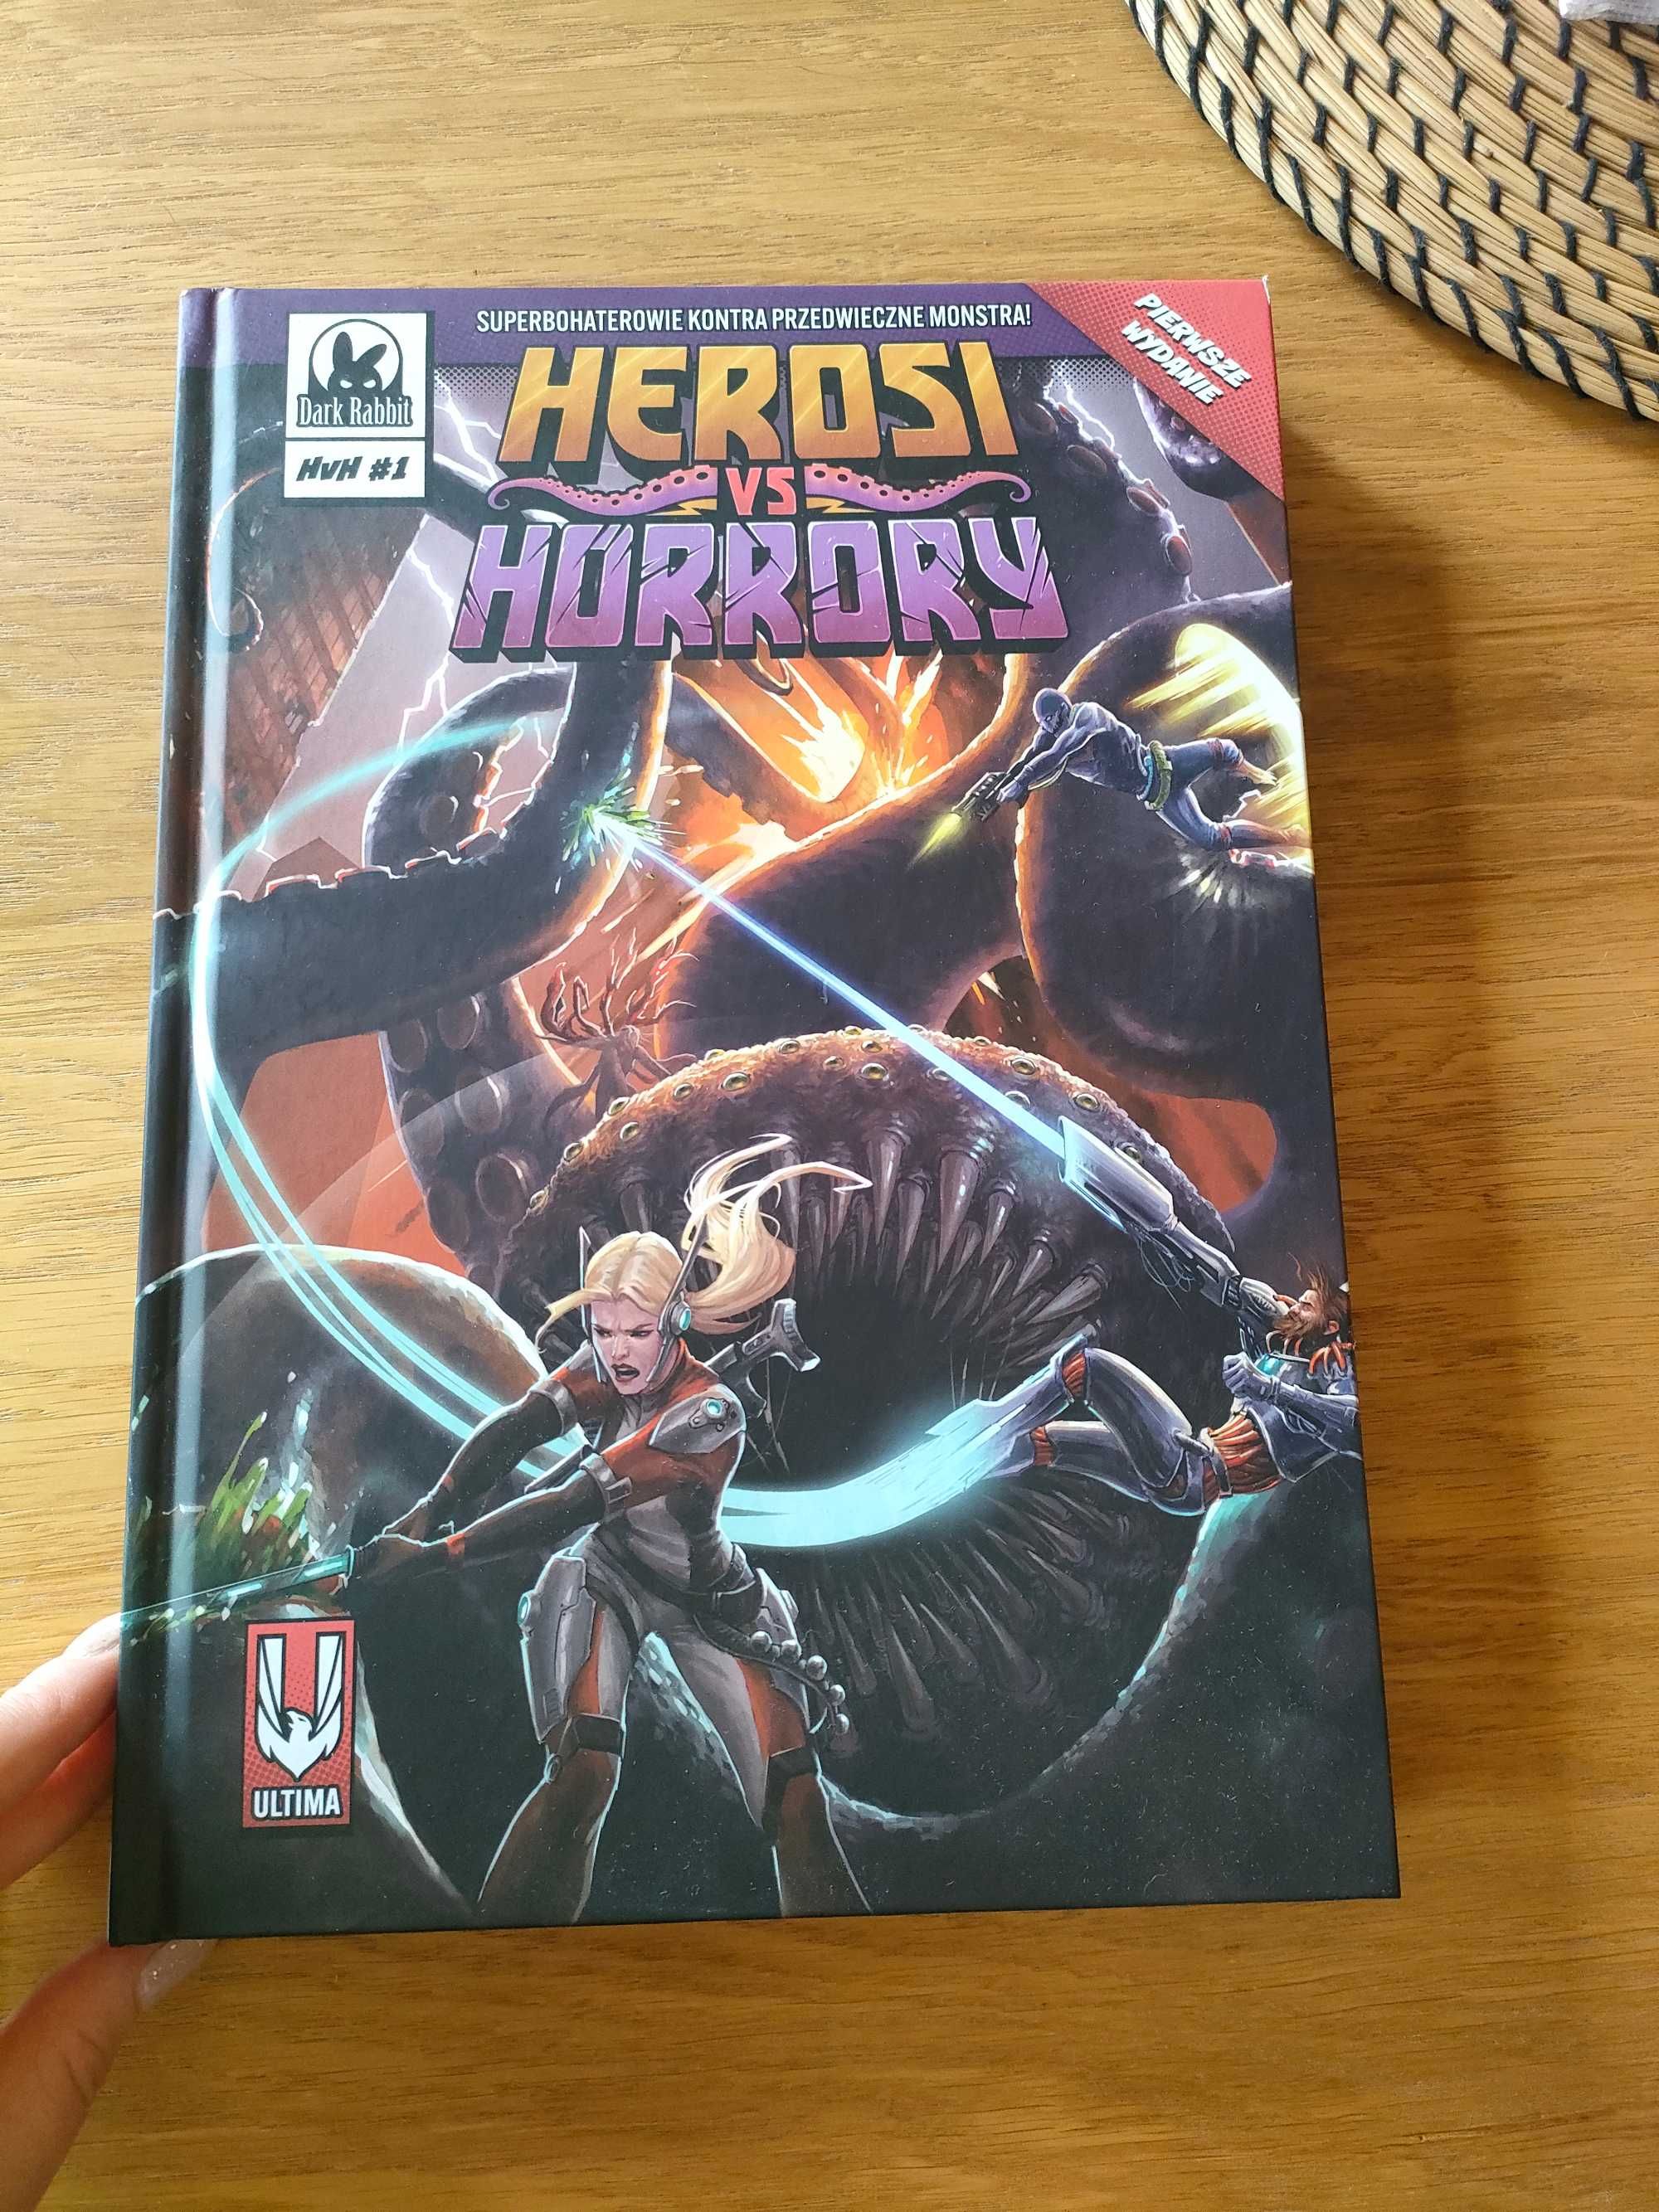 Herosi vs Horrory - Podręcznik Główny